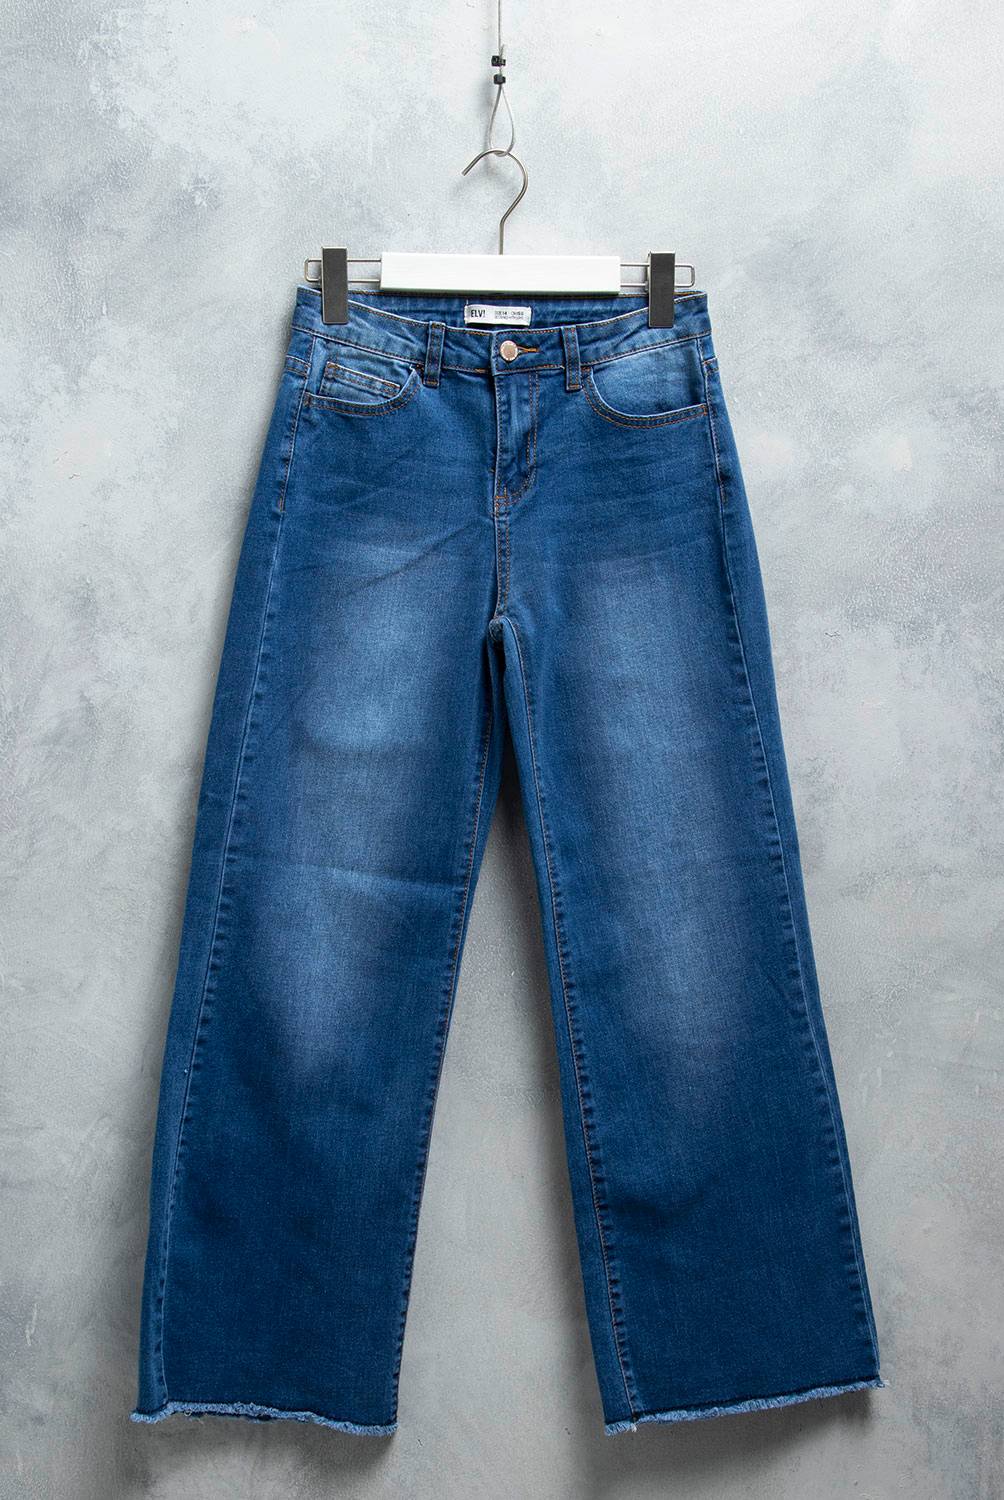 Mec Girl Jeans culotte algodón niña: a la venta a 9.99€ en